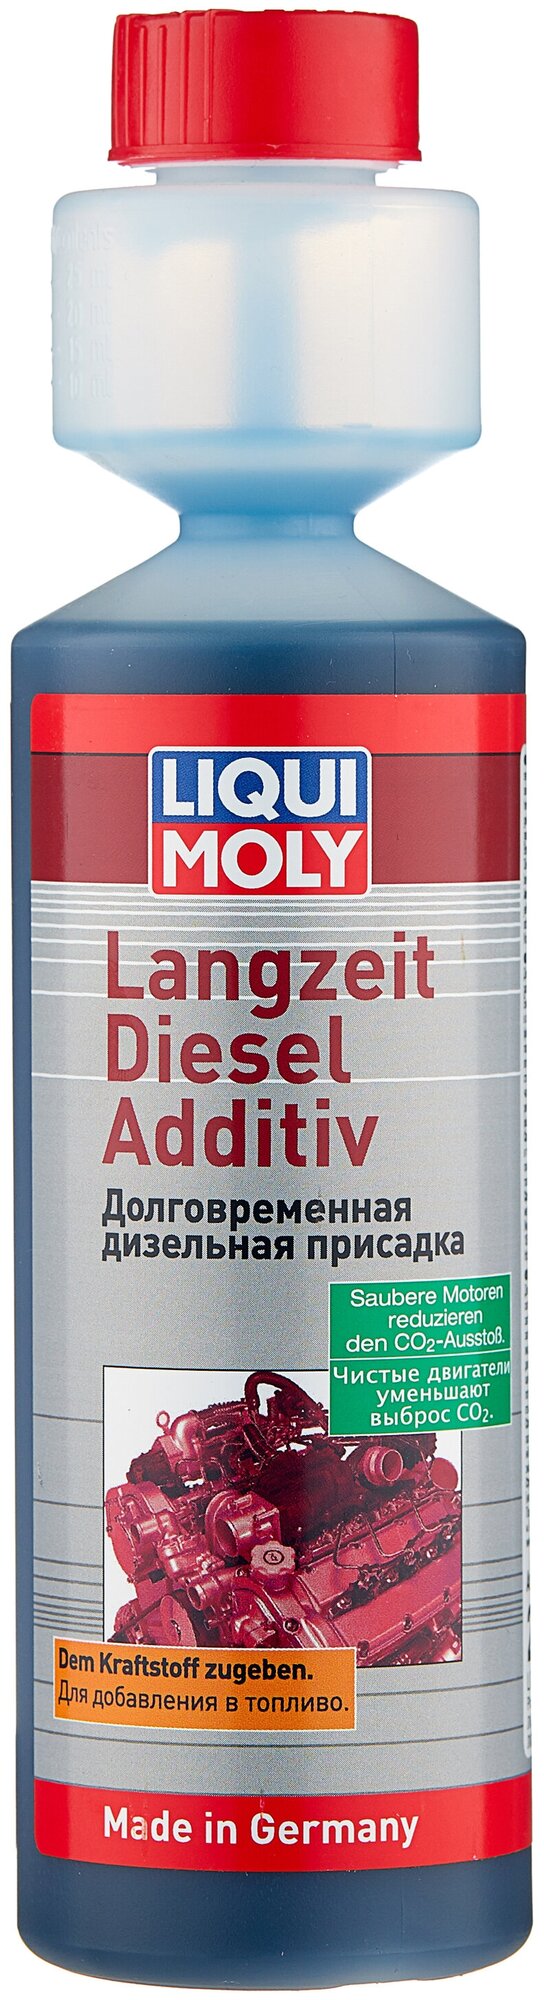 LIQUI MOLY Langzeit Diesel Additiv